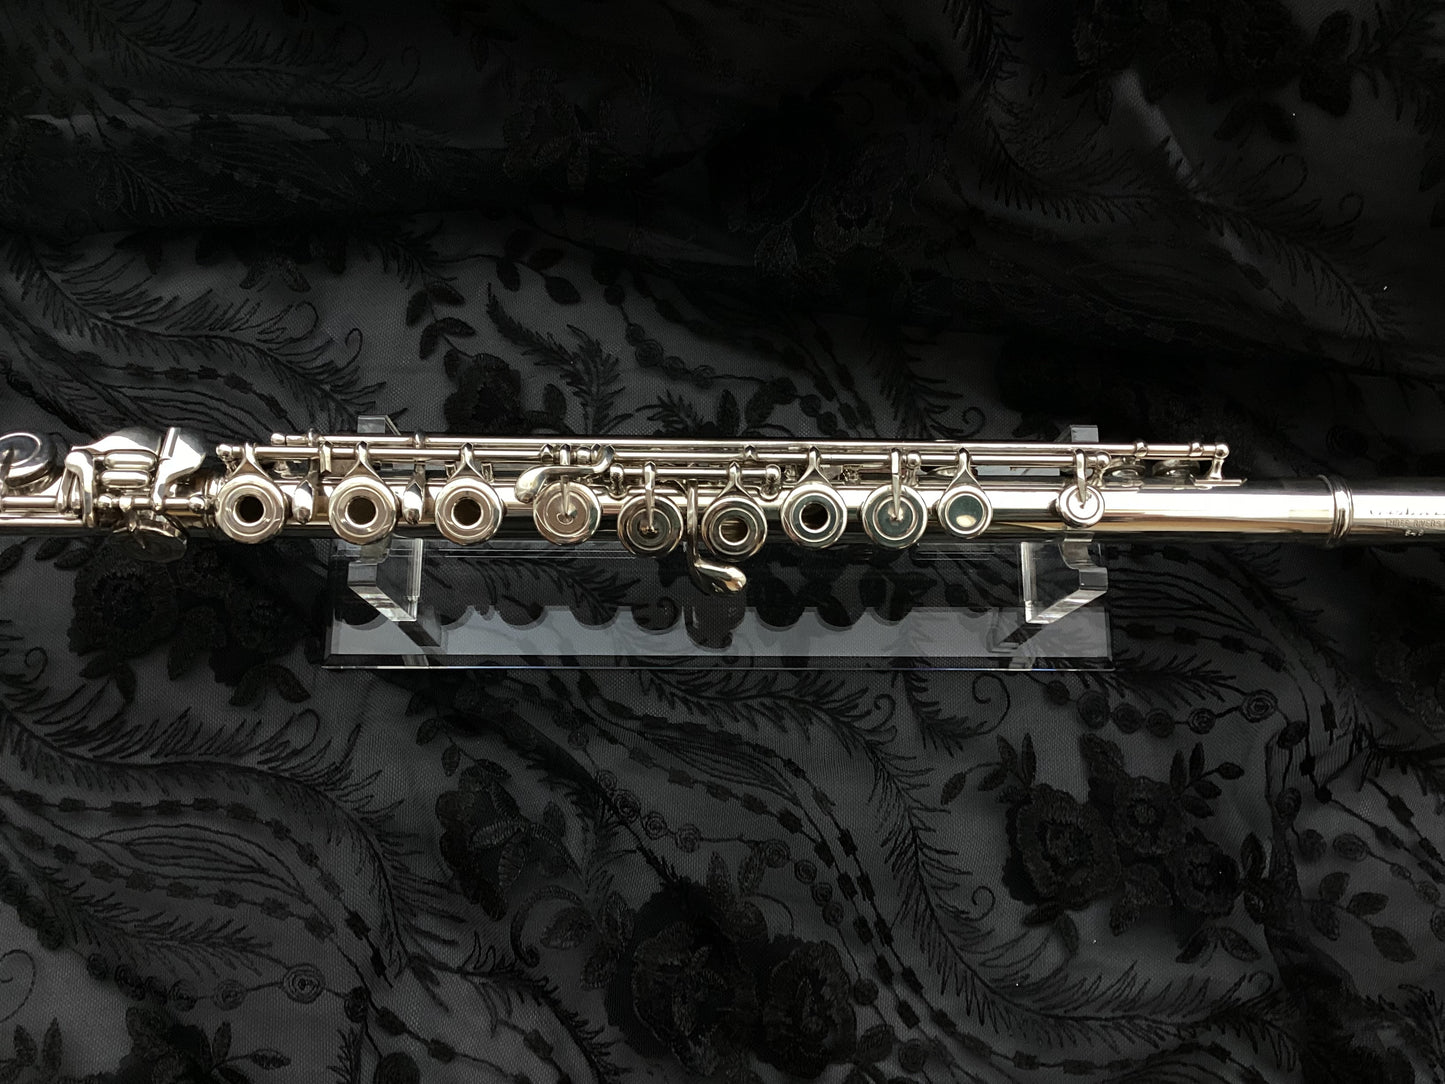 Jack Moore #543 Pre-Owned Flute